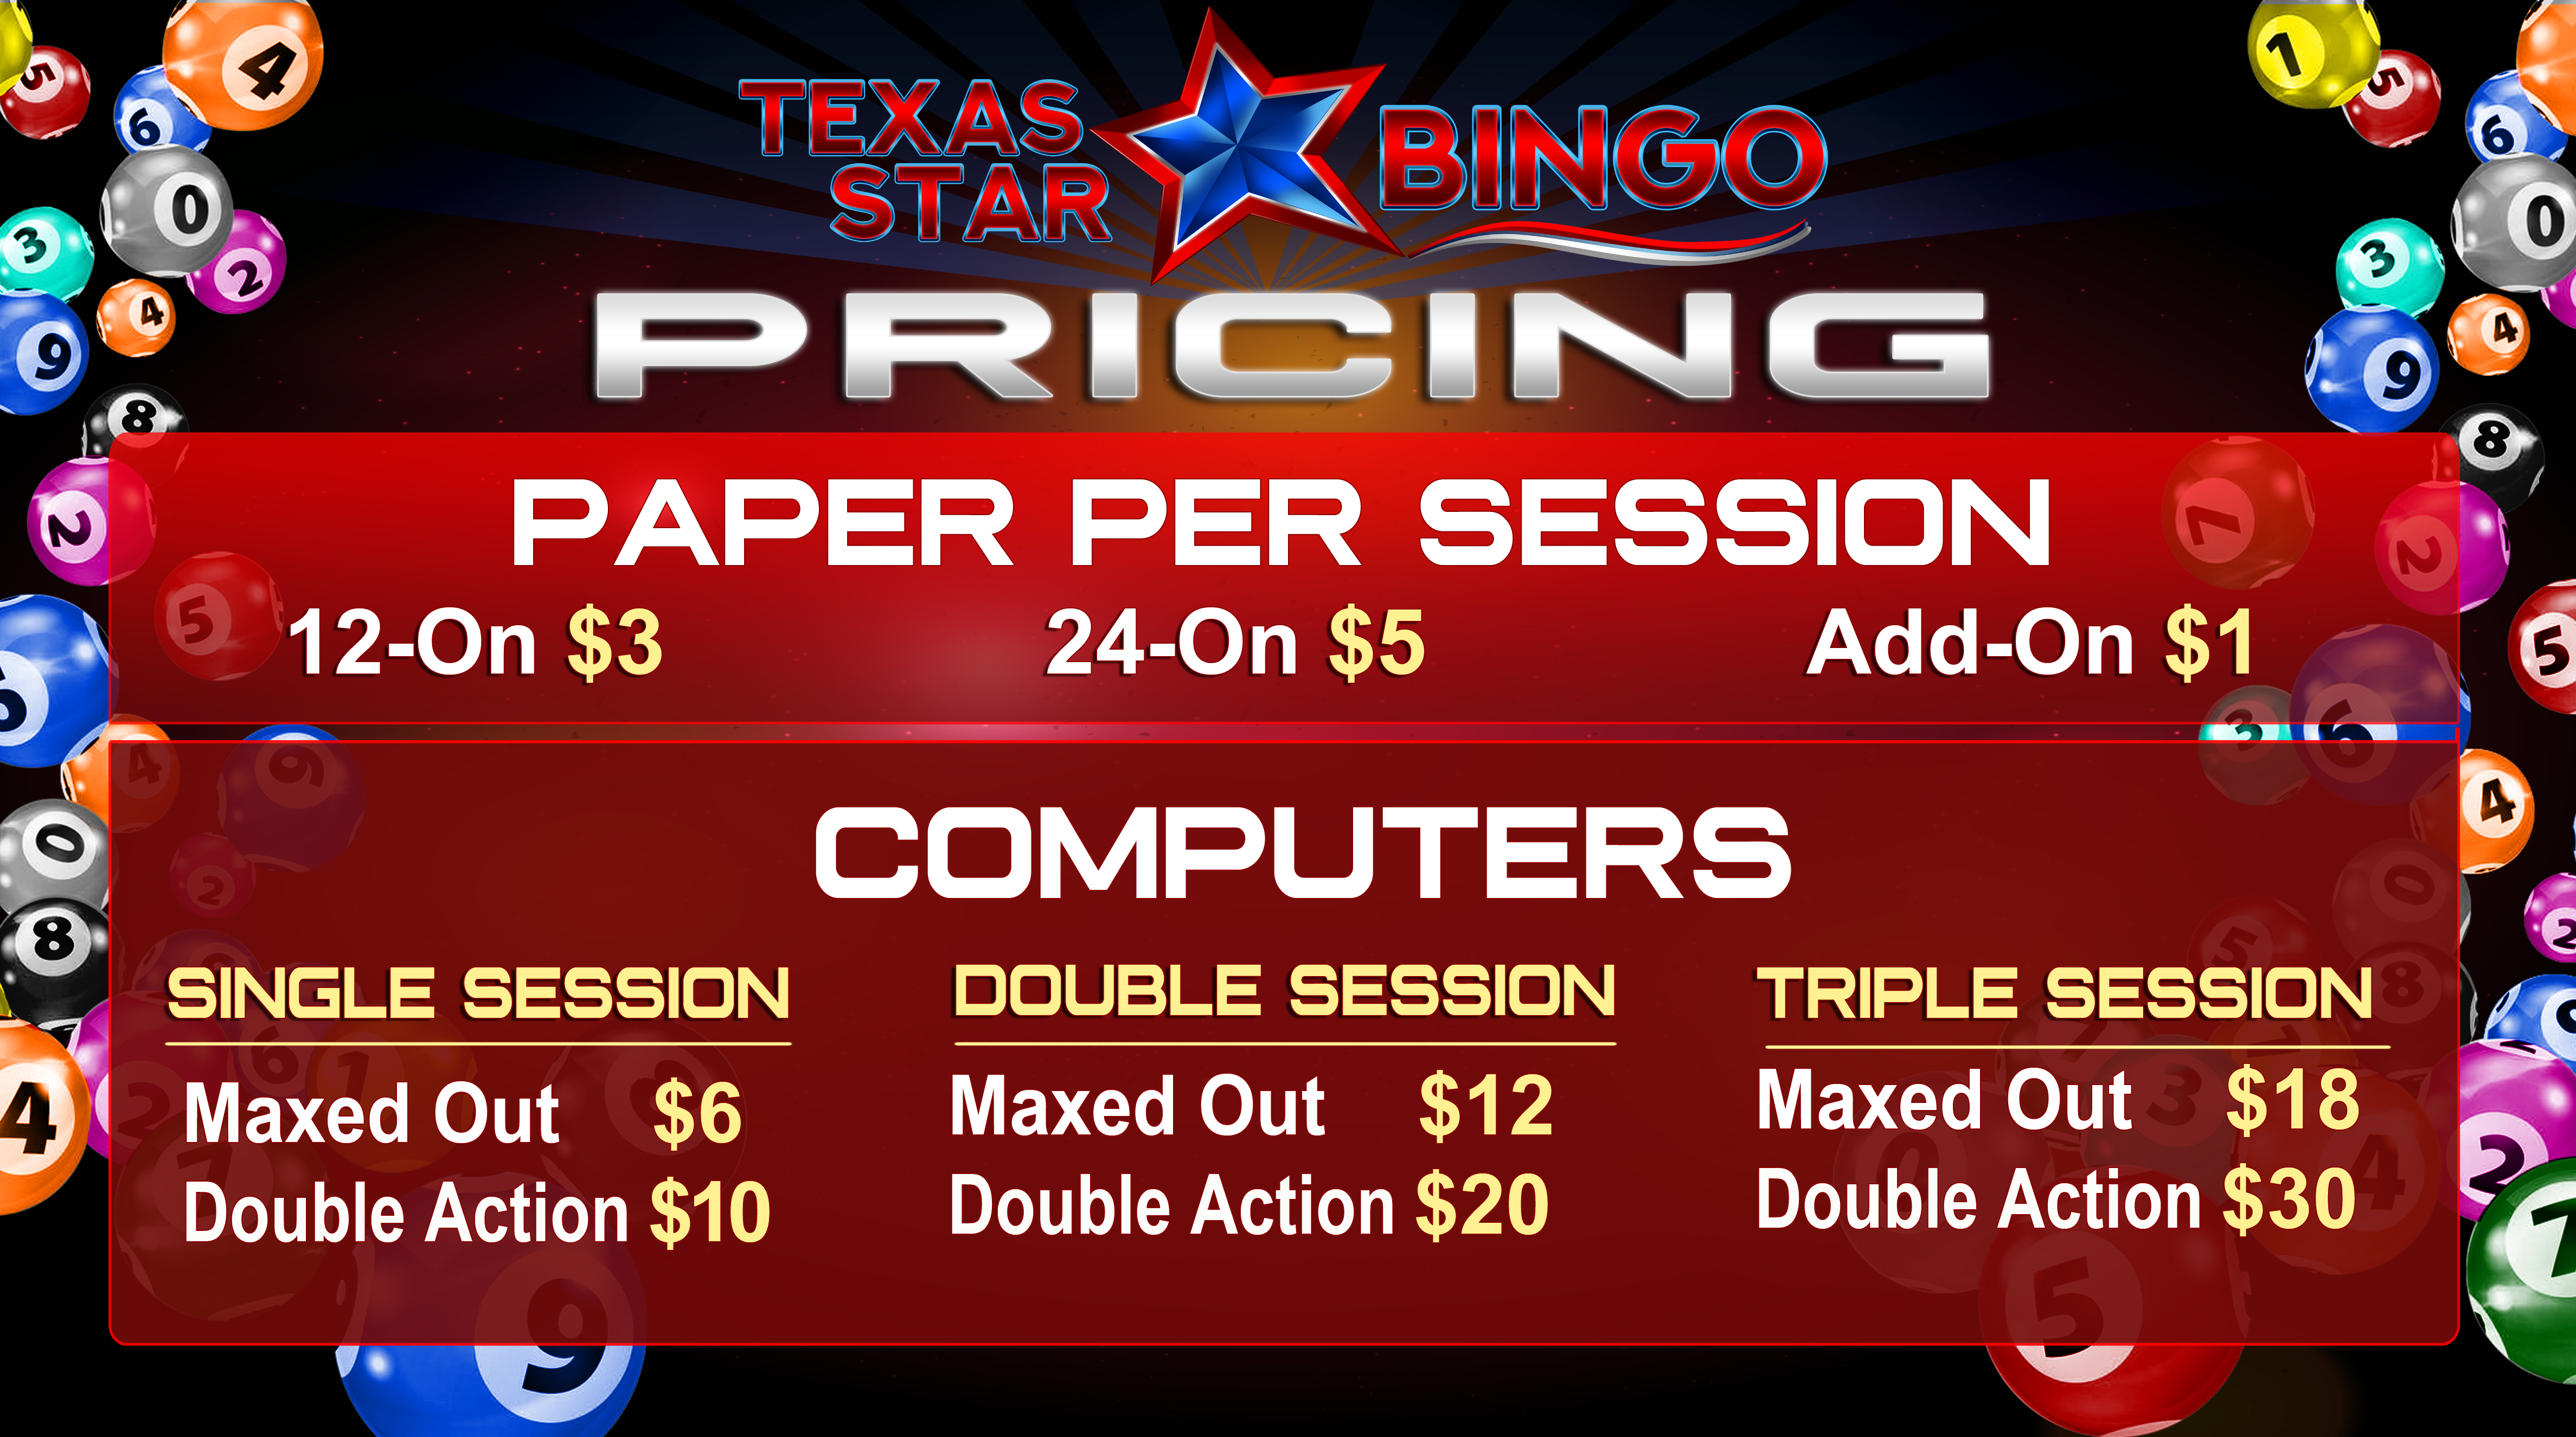 Texas Star Bingo PRICING